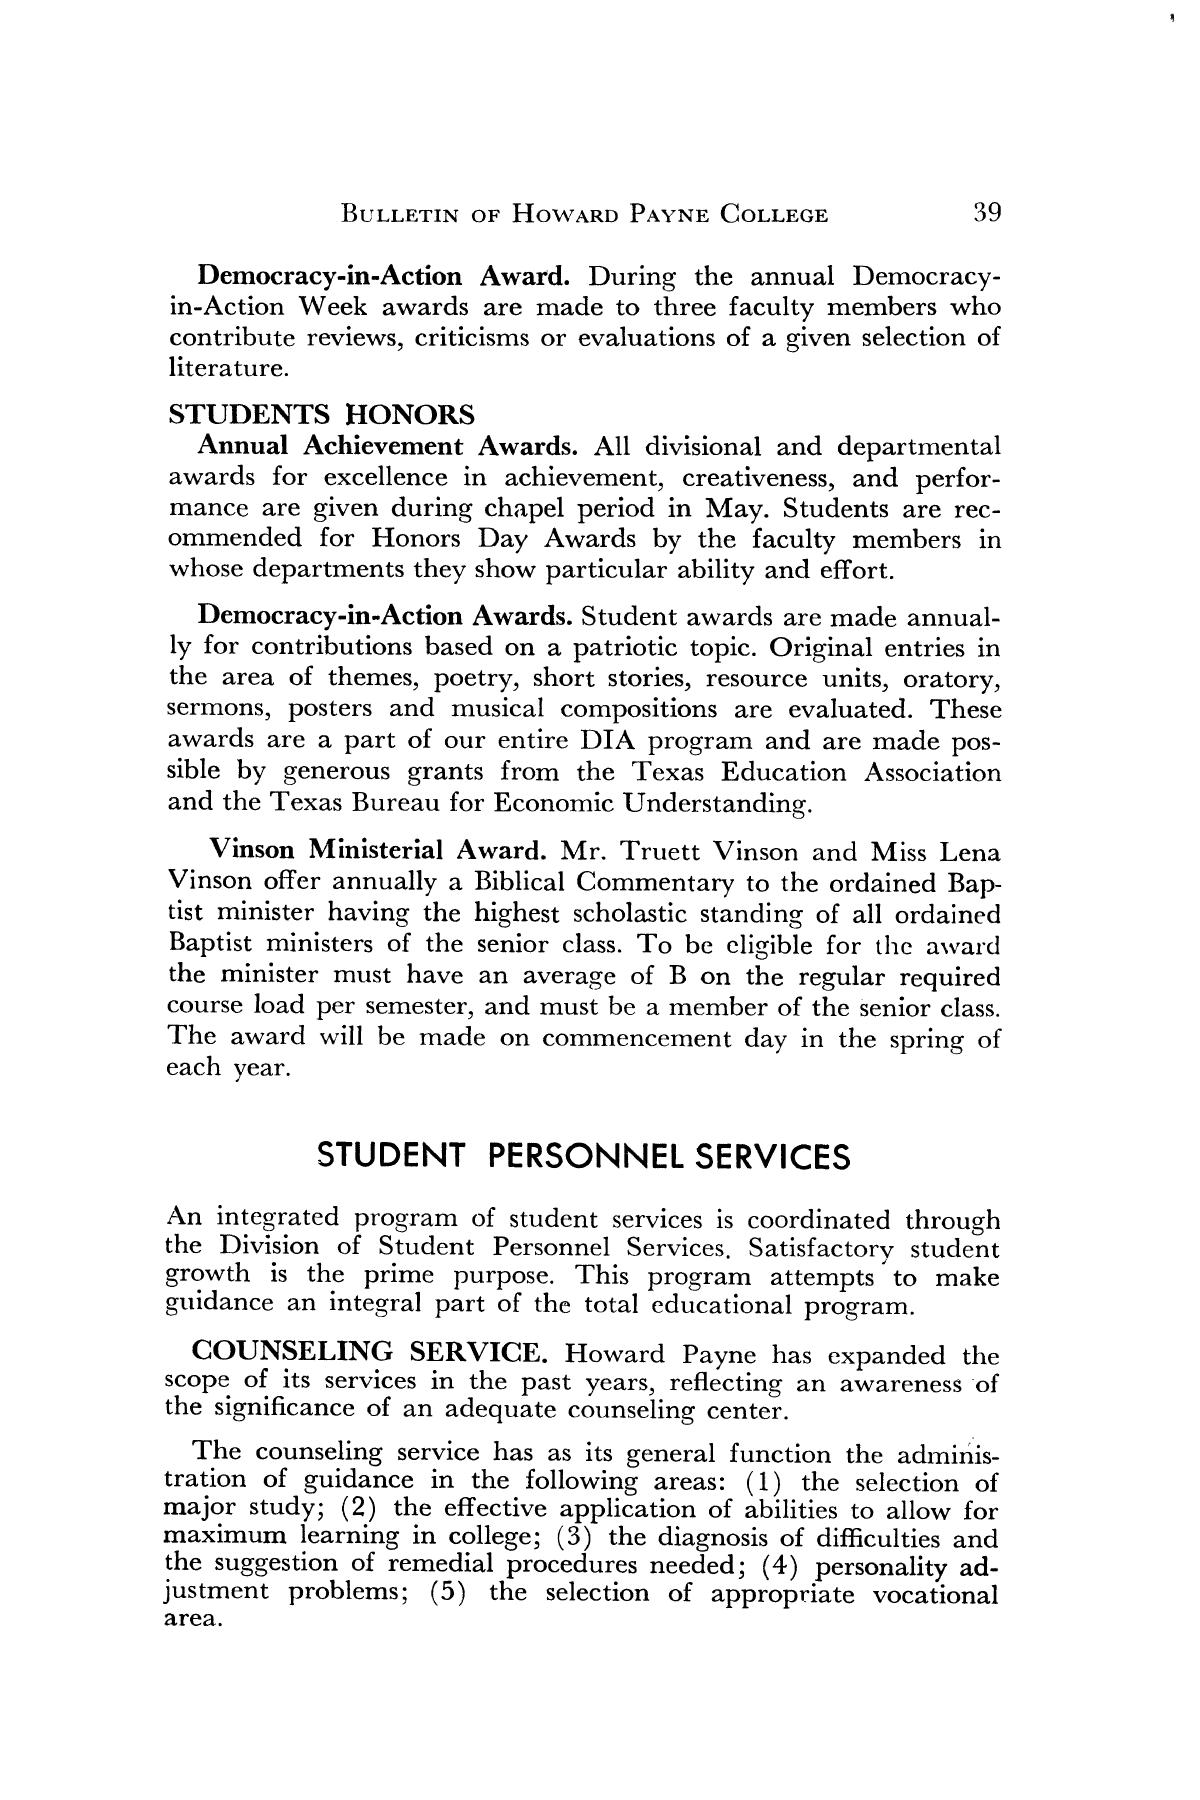 Catalog of Howard Payne College, 1960-1961
                                                
                                                    39
                                                